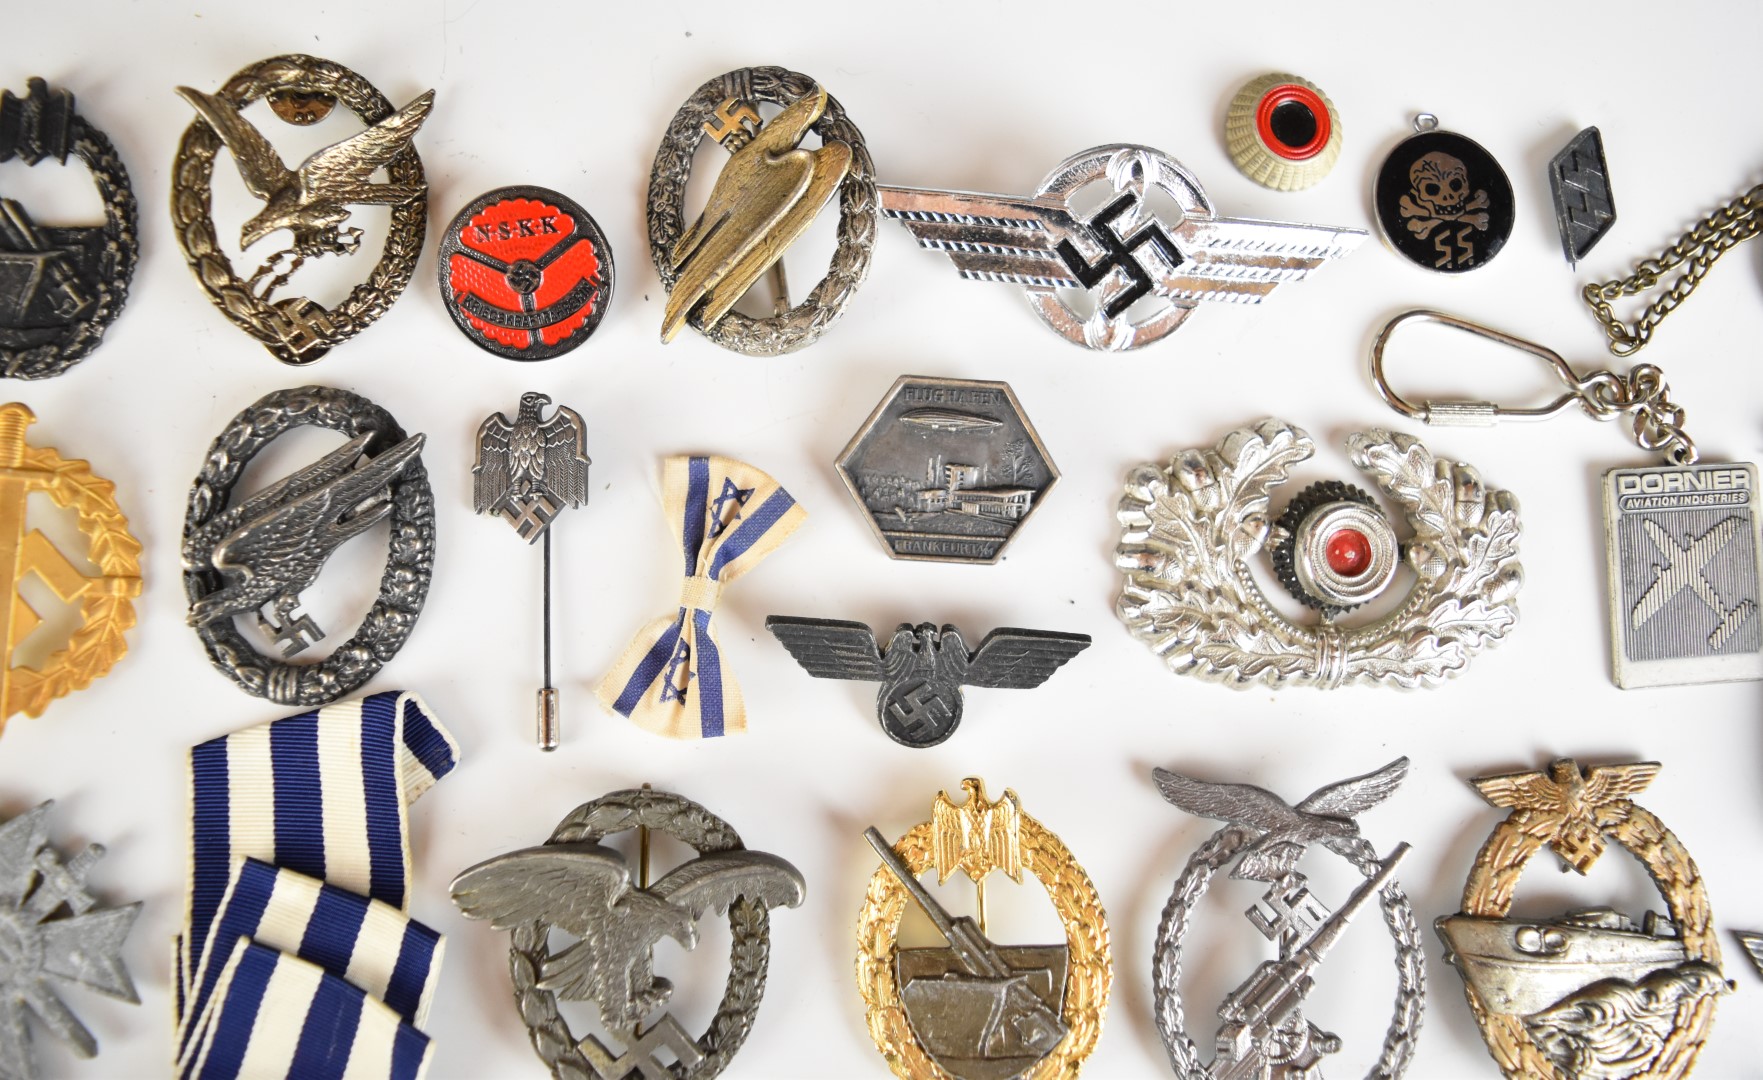 Replica German WW2 Nazi Third Reich badges, insignia and medals including High Seas Fleet, Artillery - Image 12 of 16